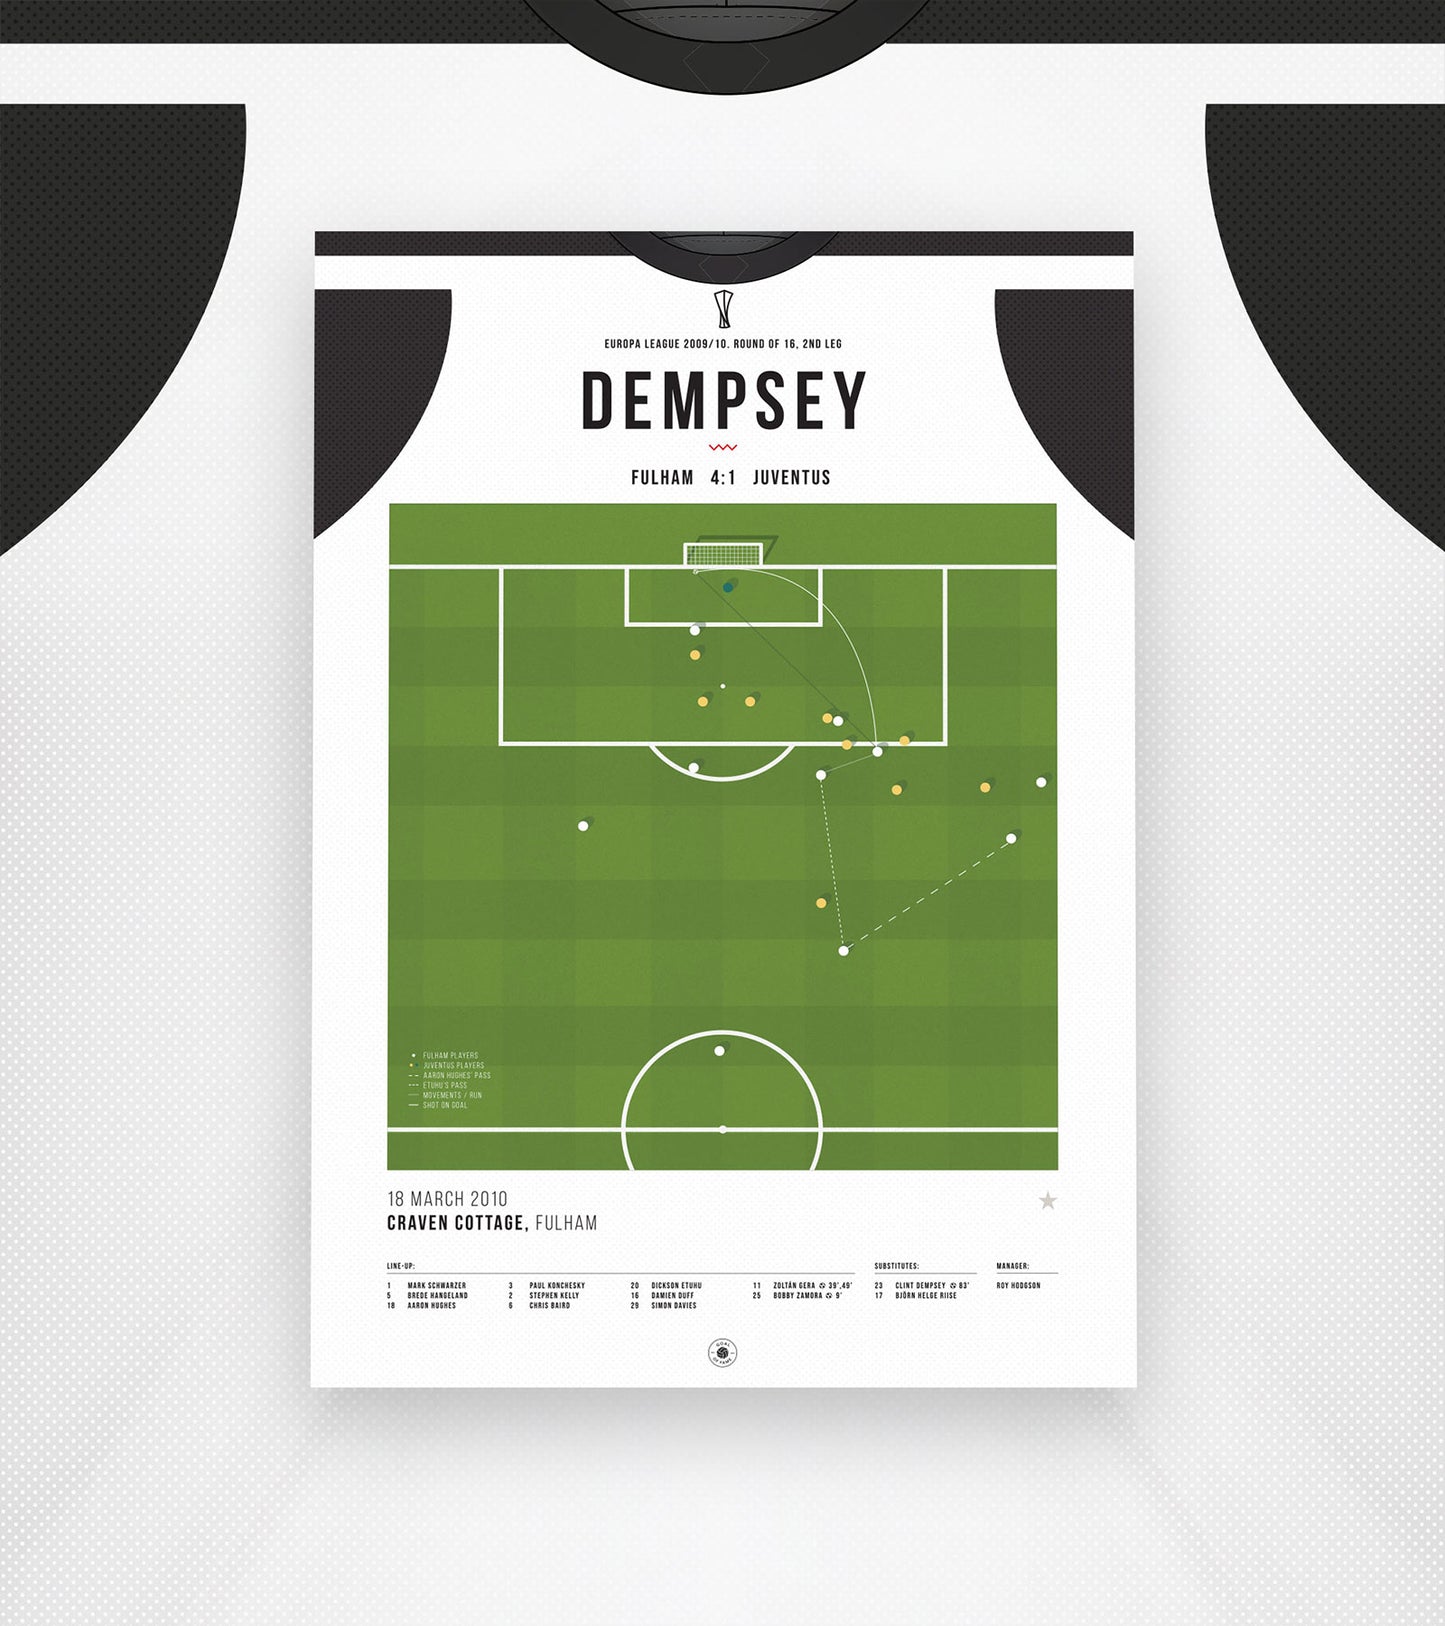 Clint Dempsey Goal vs Juventus